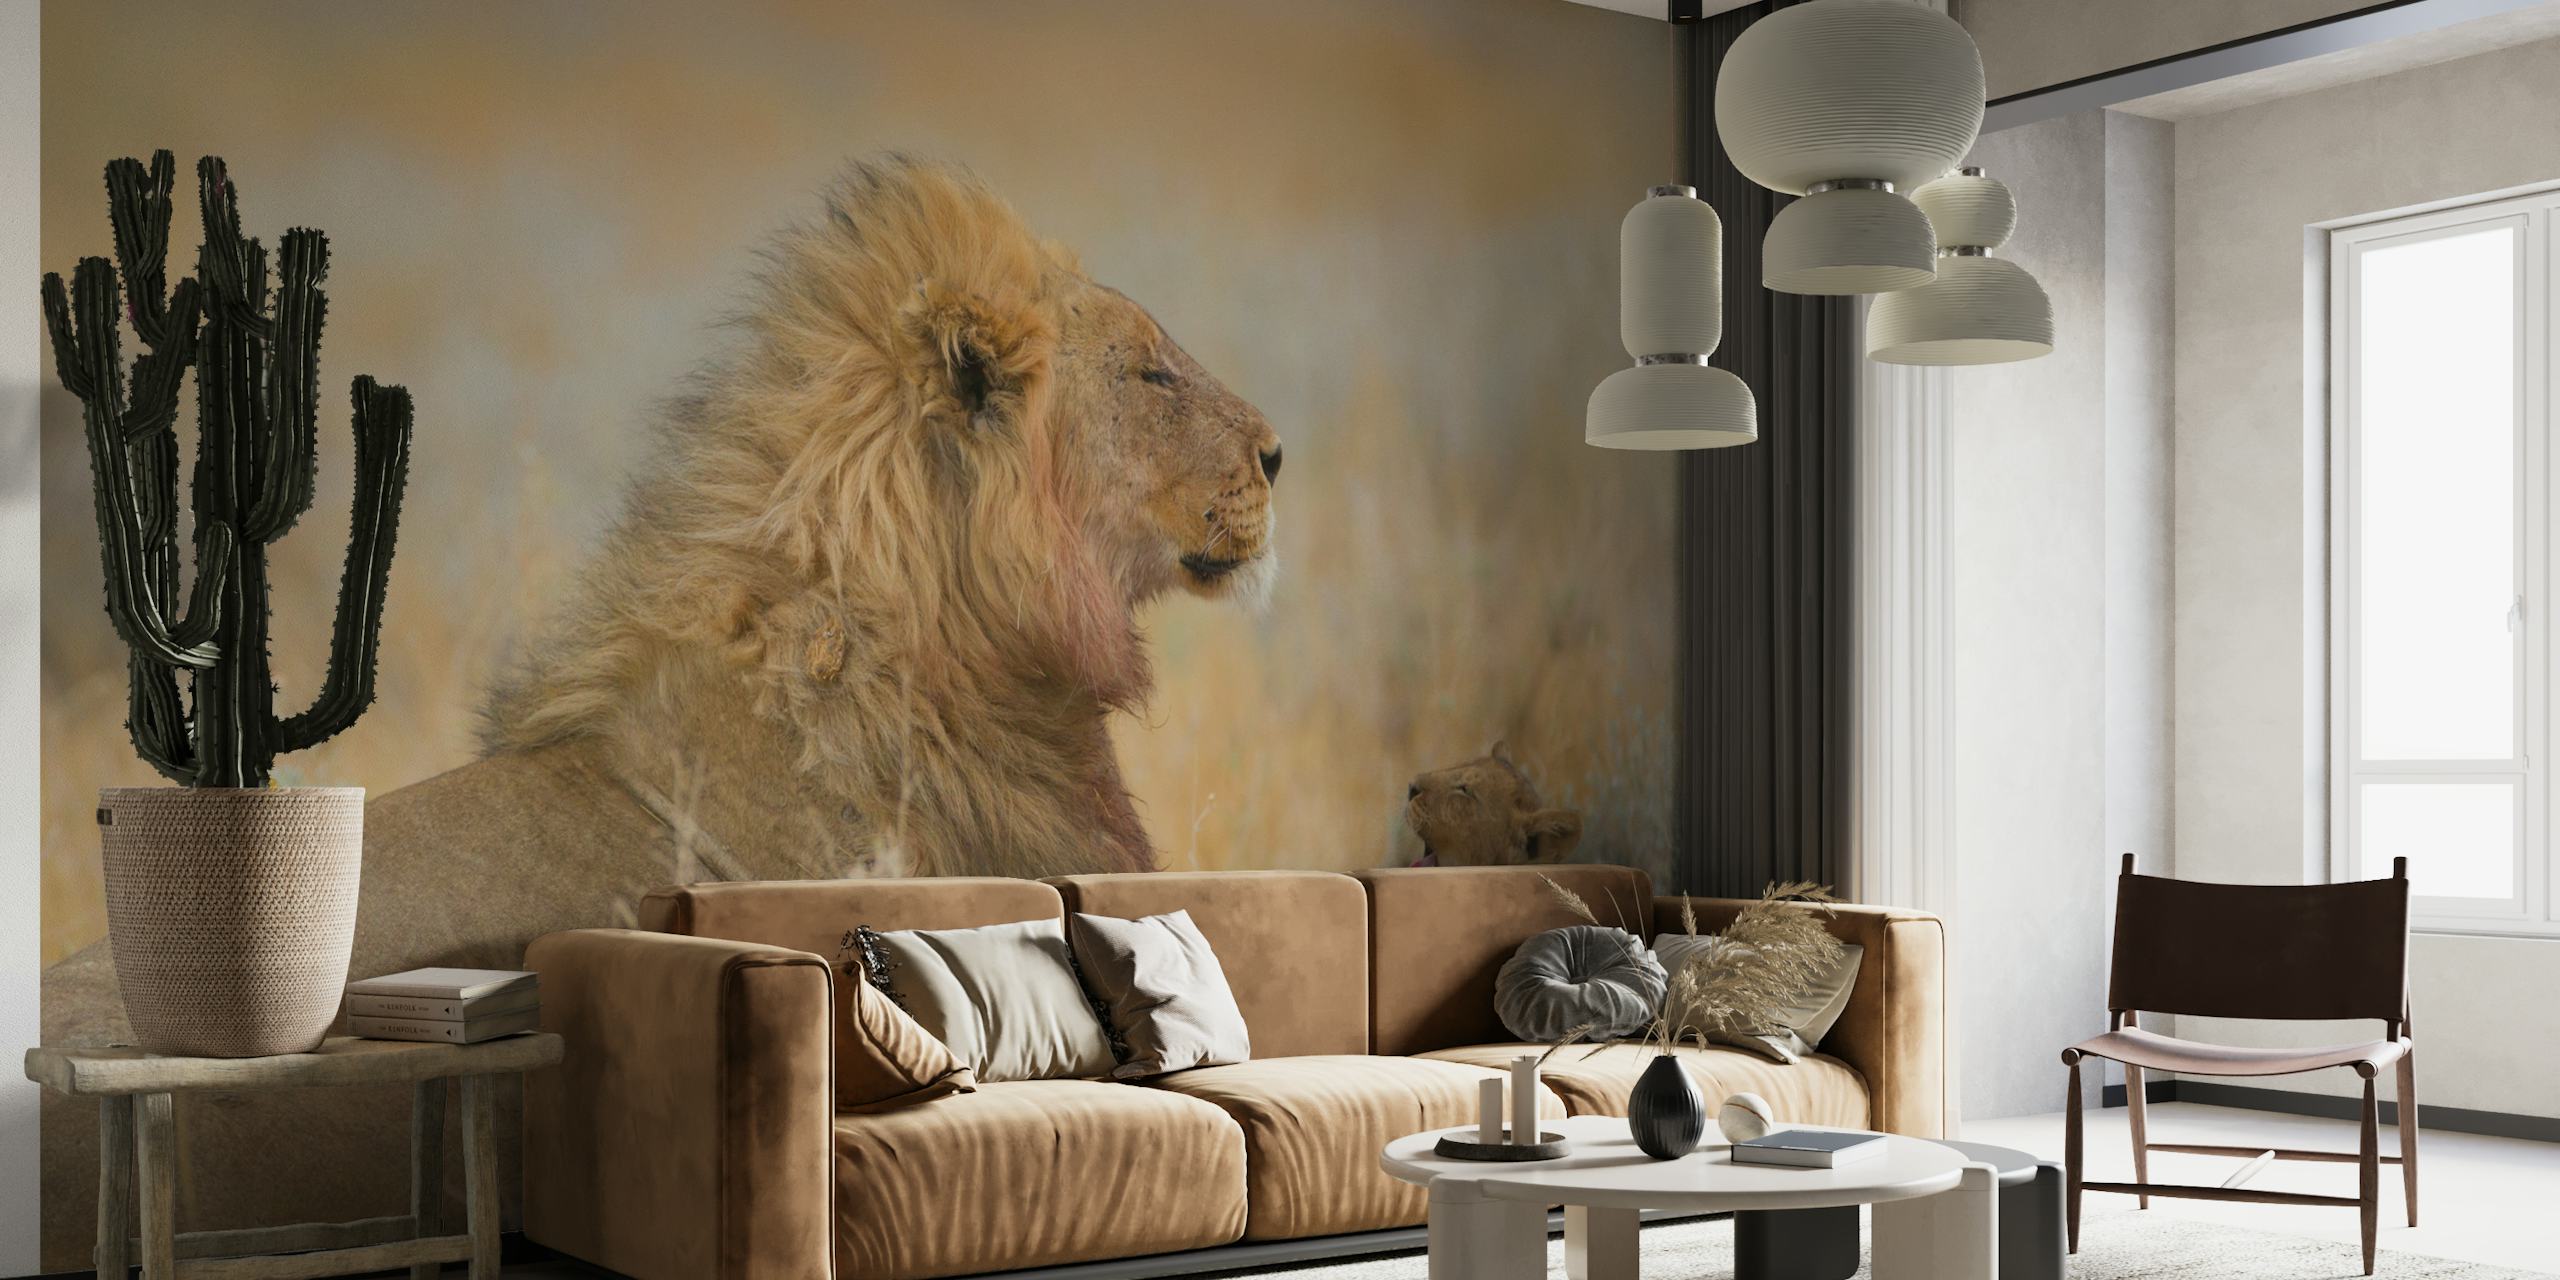 Male lion with cub papel pintado